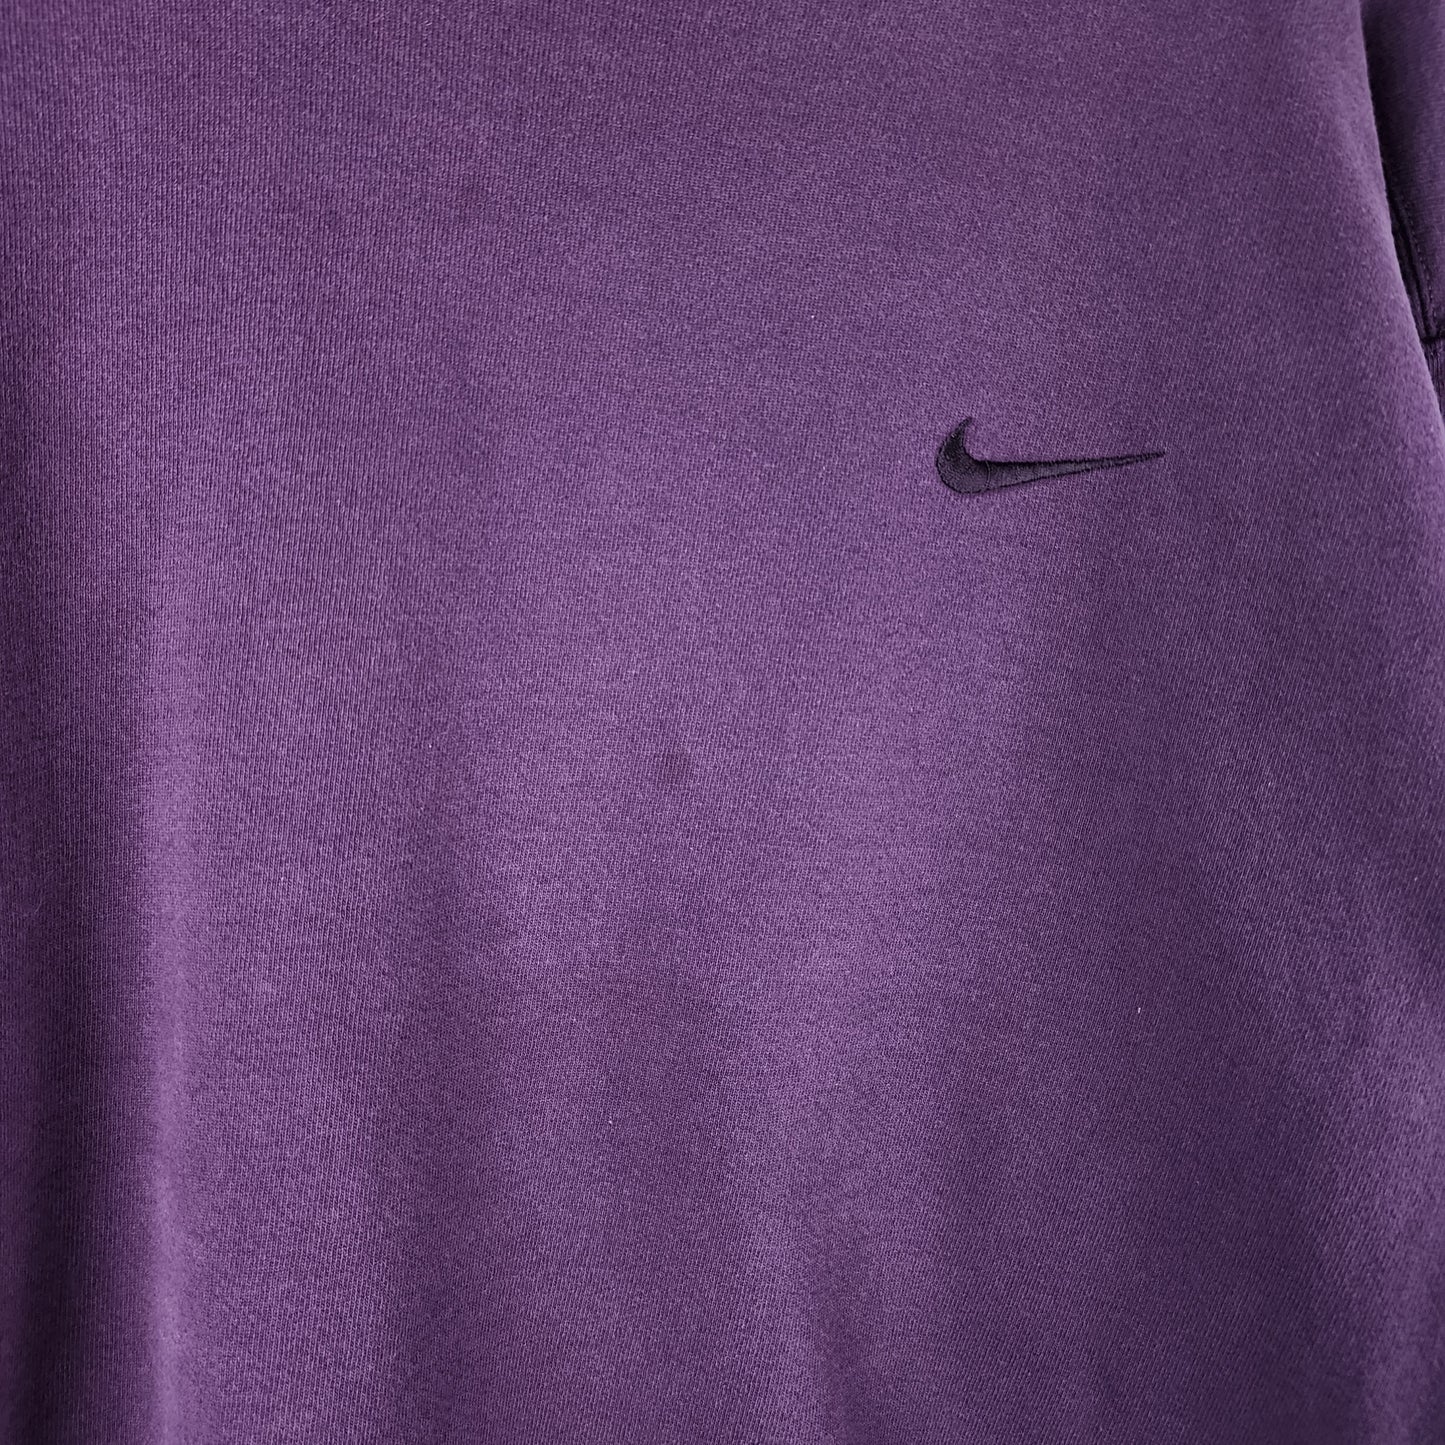 Vintage Nike Miniswoosh embroidered tonal logo 90's purple crewneck